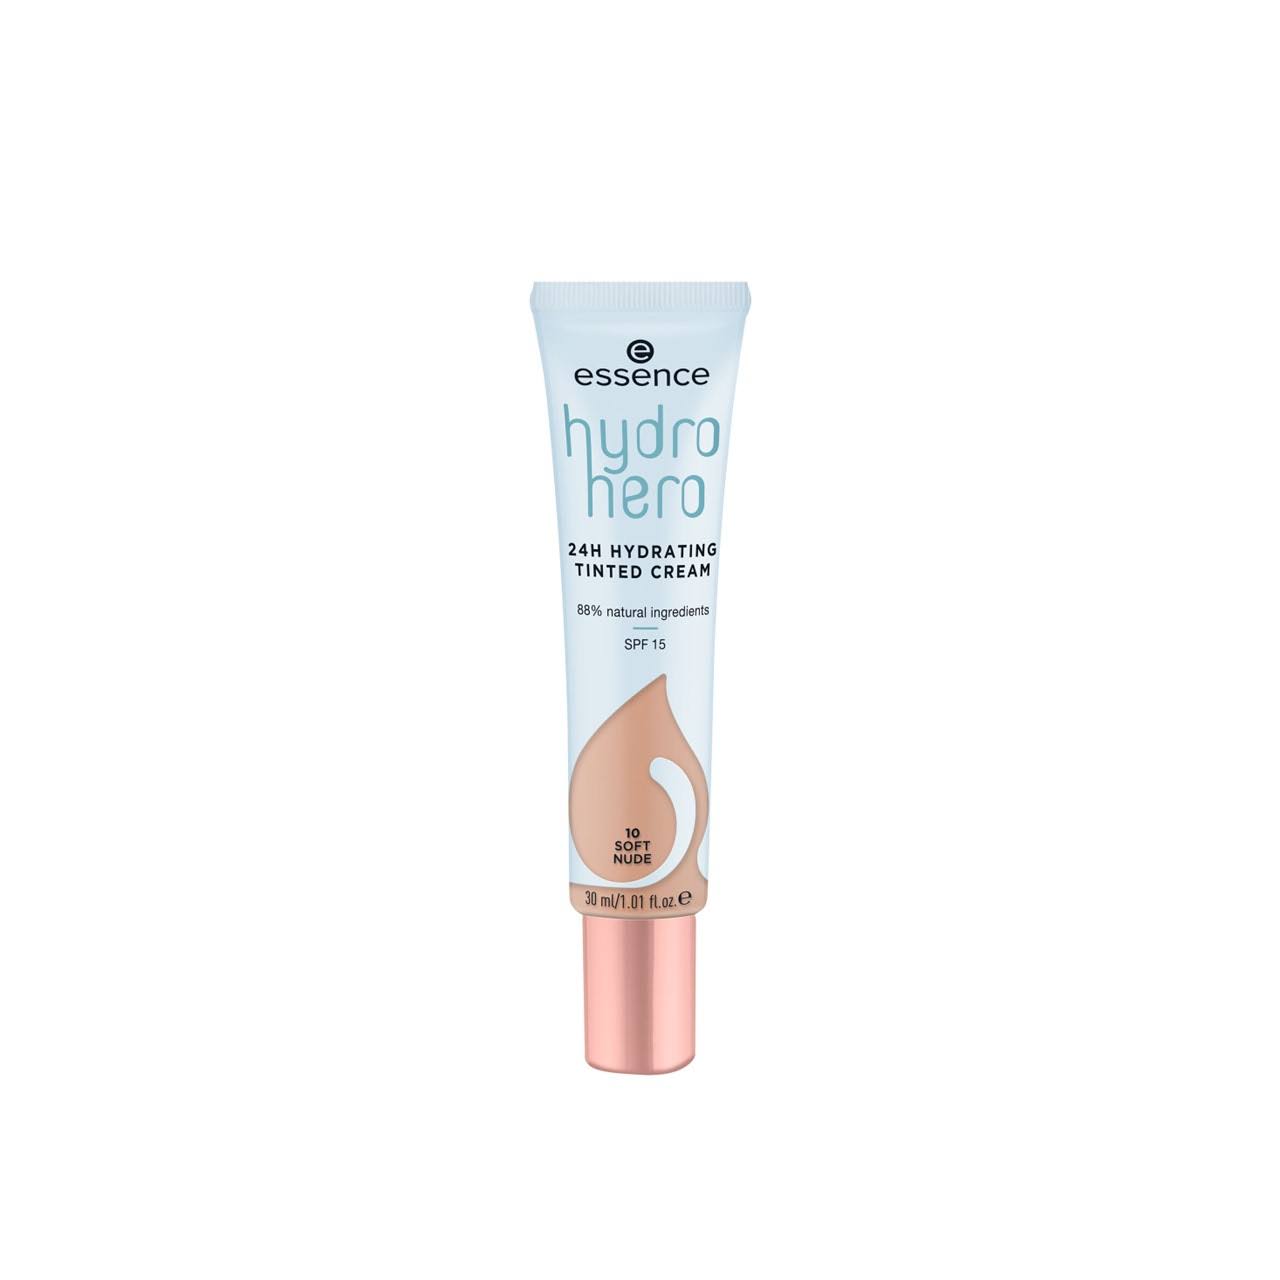 essence Hydro Hero 24h Hydrating Tinted Cream SPF15 10 Soft Nude 30ml